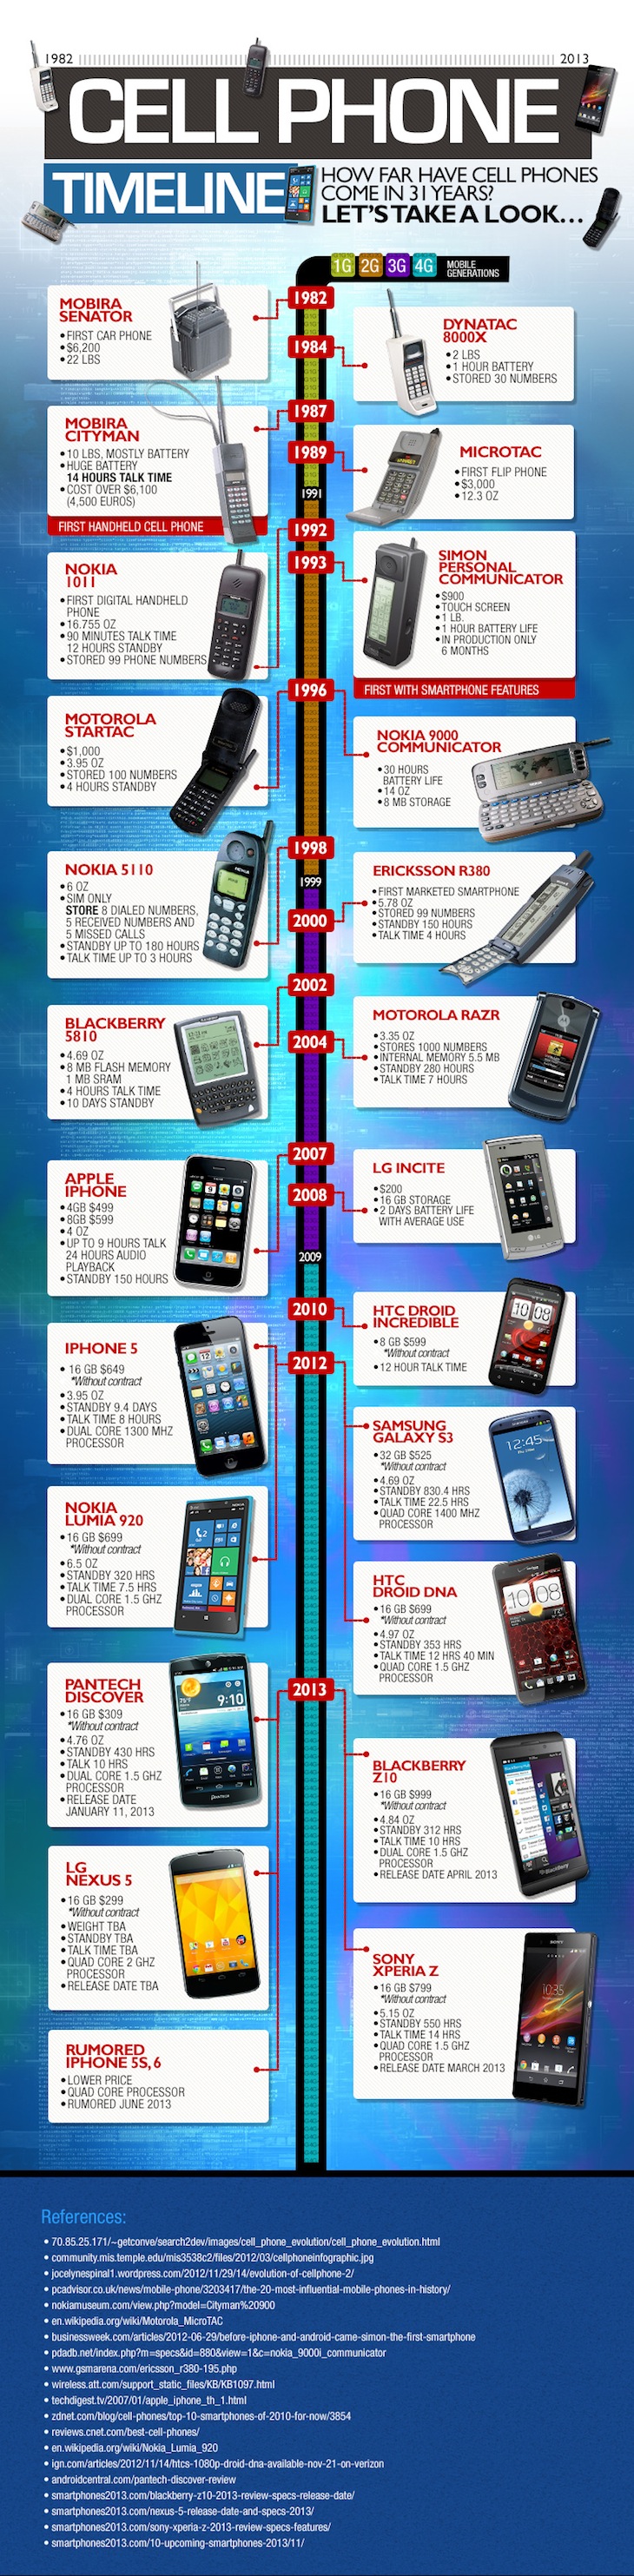 Mobile Phones Journey in Last 31 Years